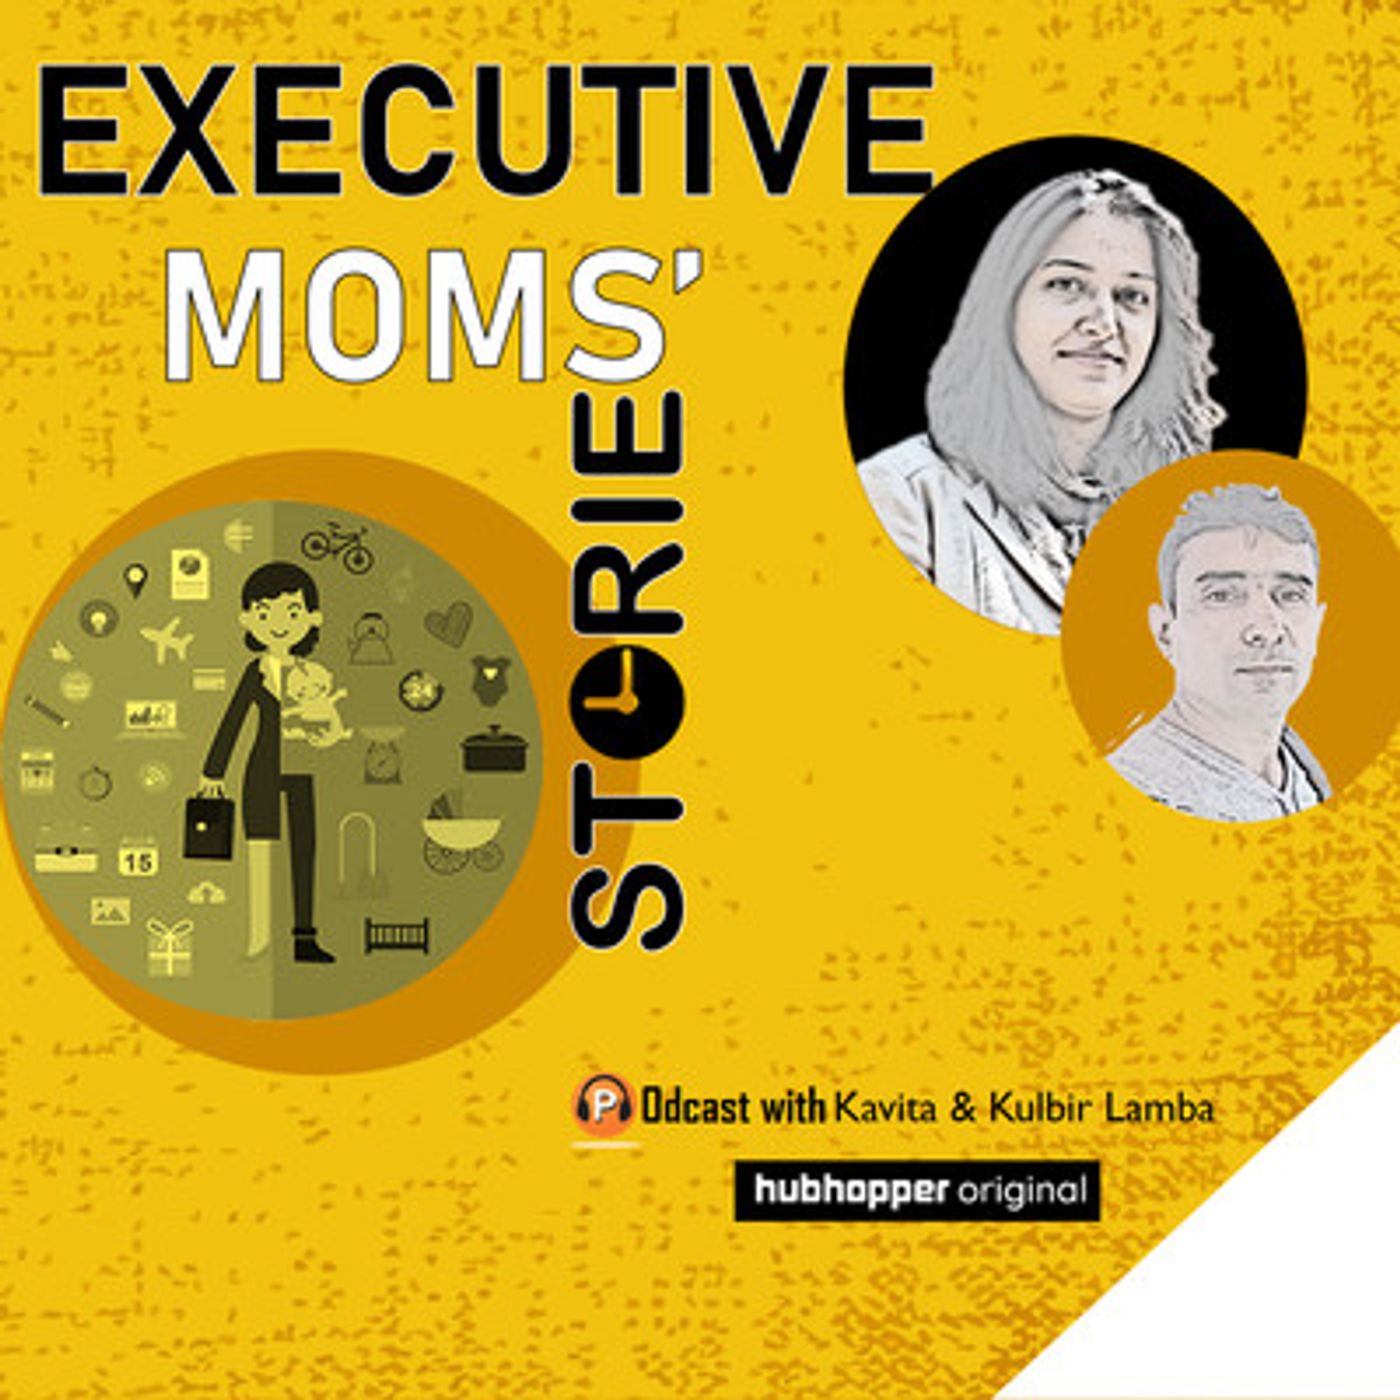 Executive Moms' Stories